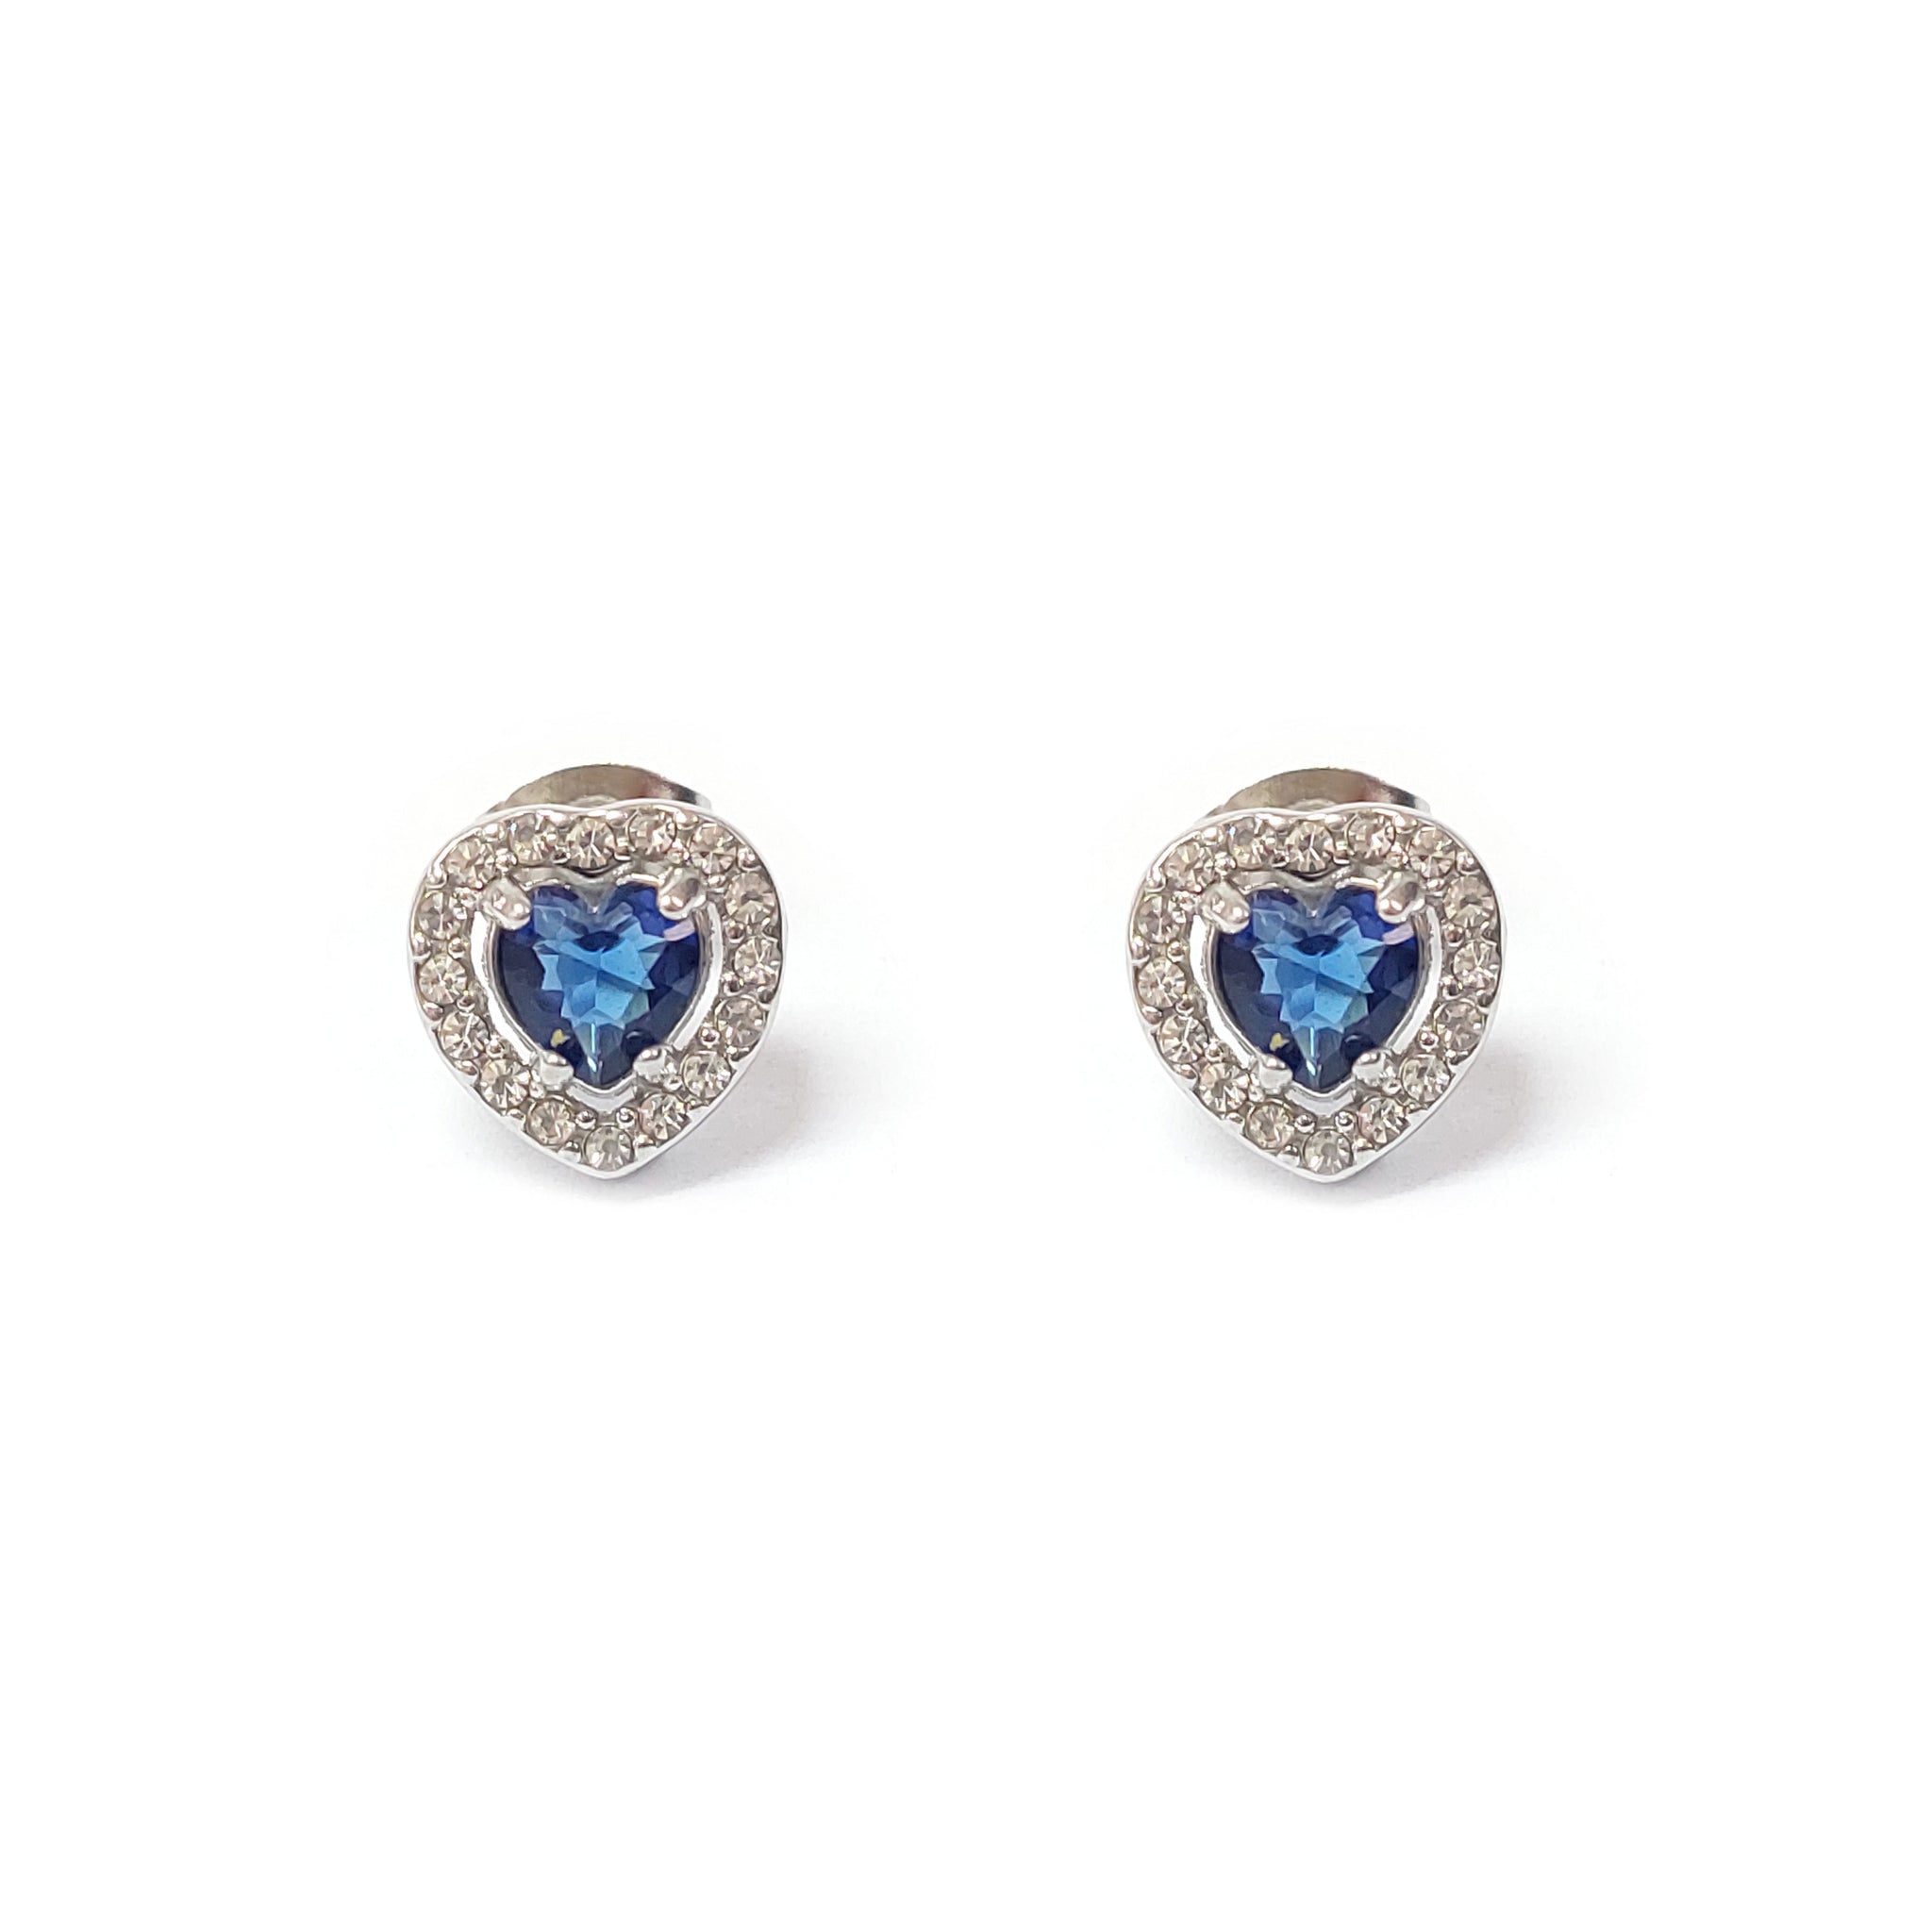 ESE 7934: Enclosed Cz-Studded Sapphire Blue Heart Cz Earrings